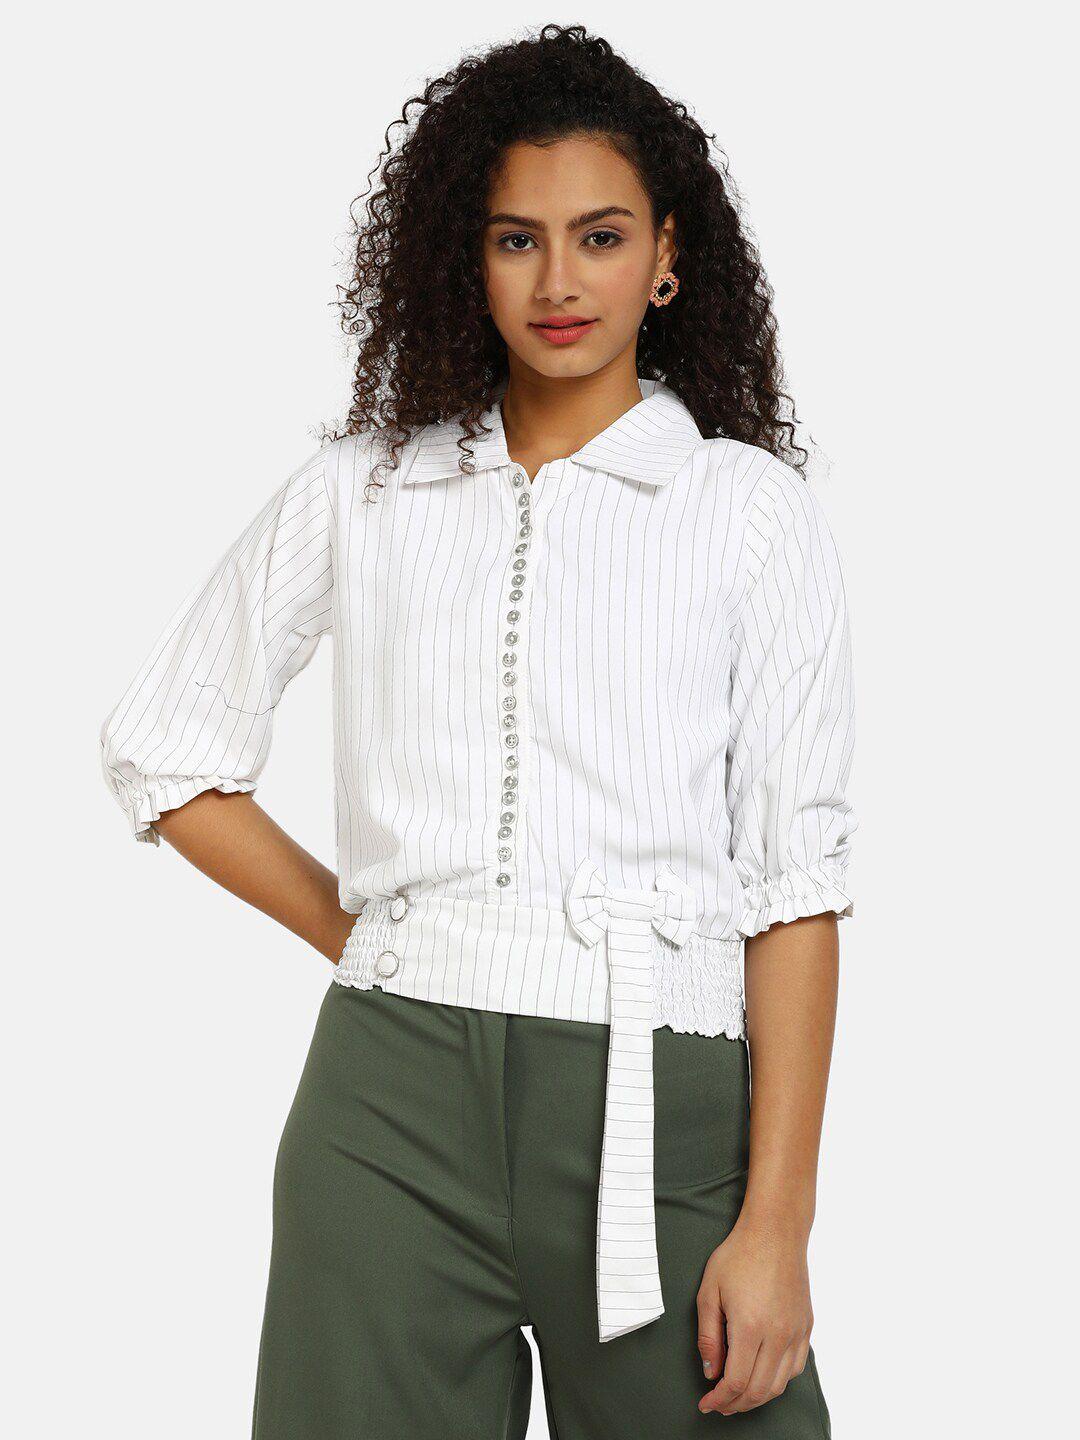 v-mart white striped shirt style top